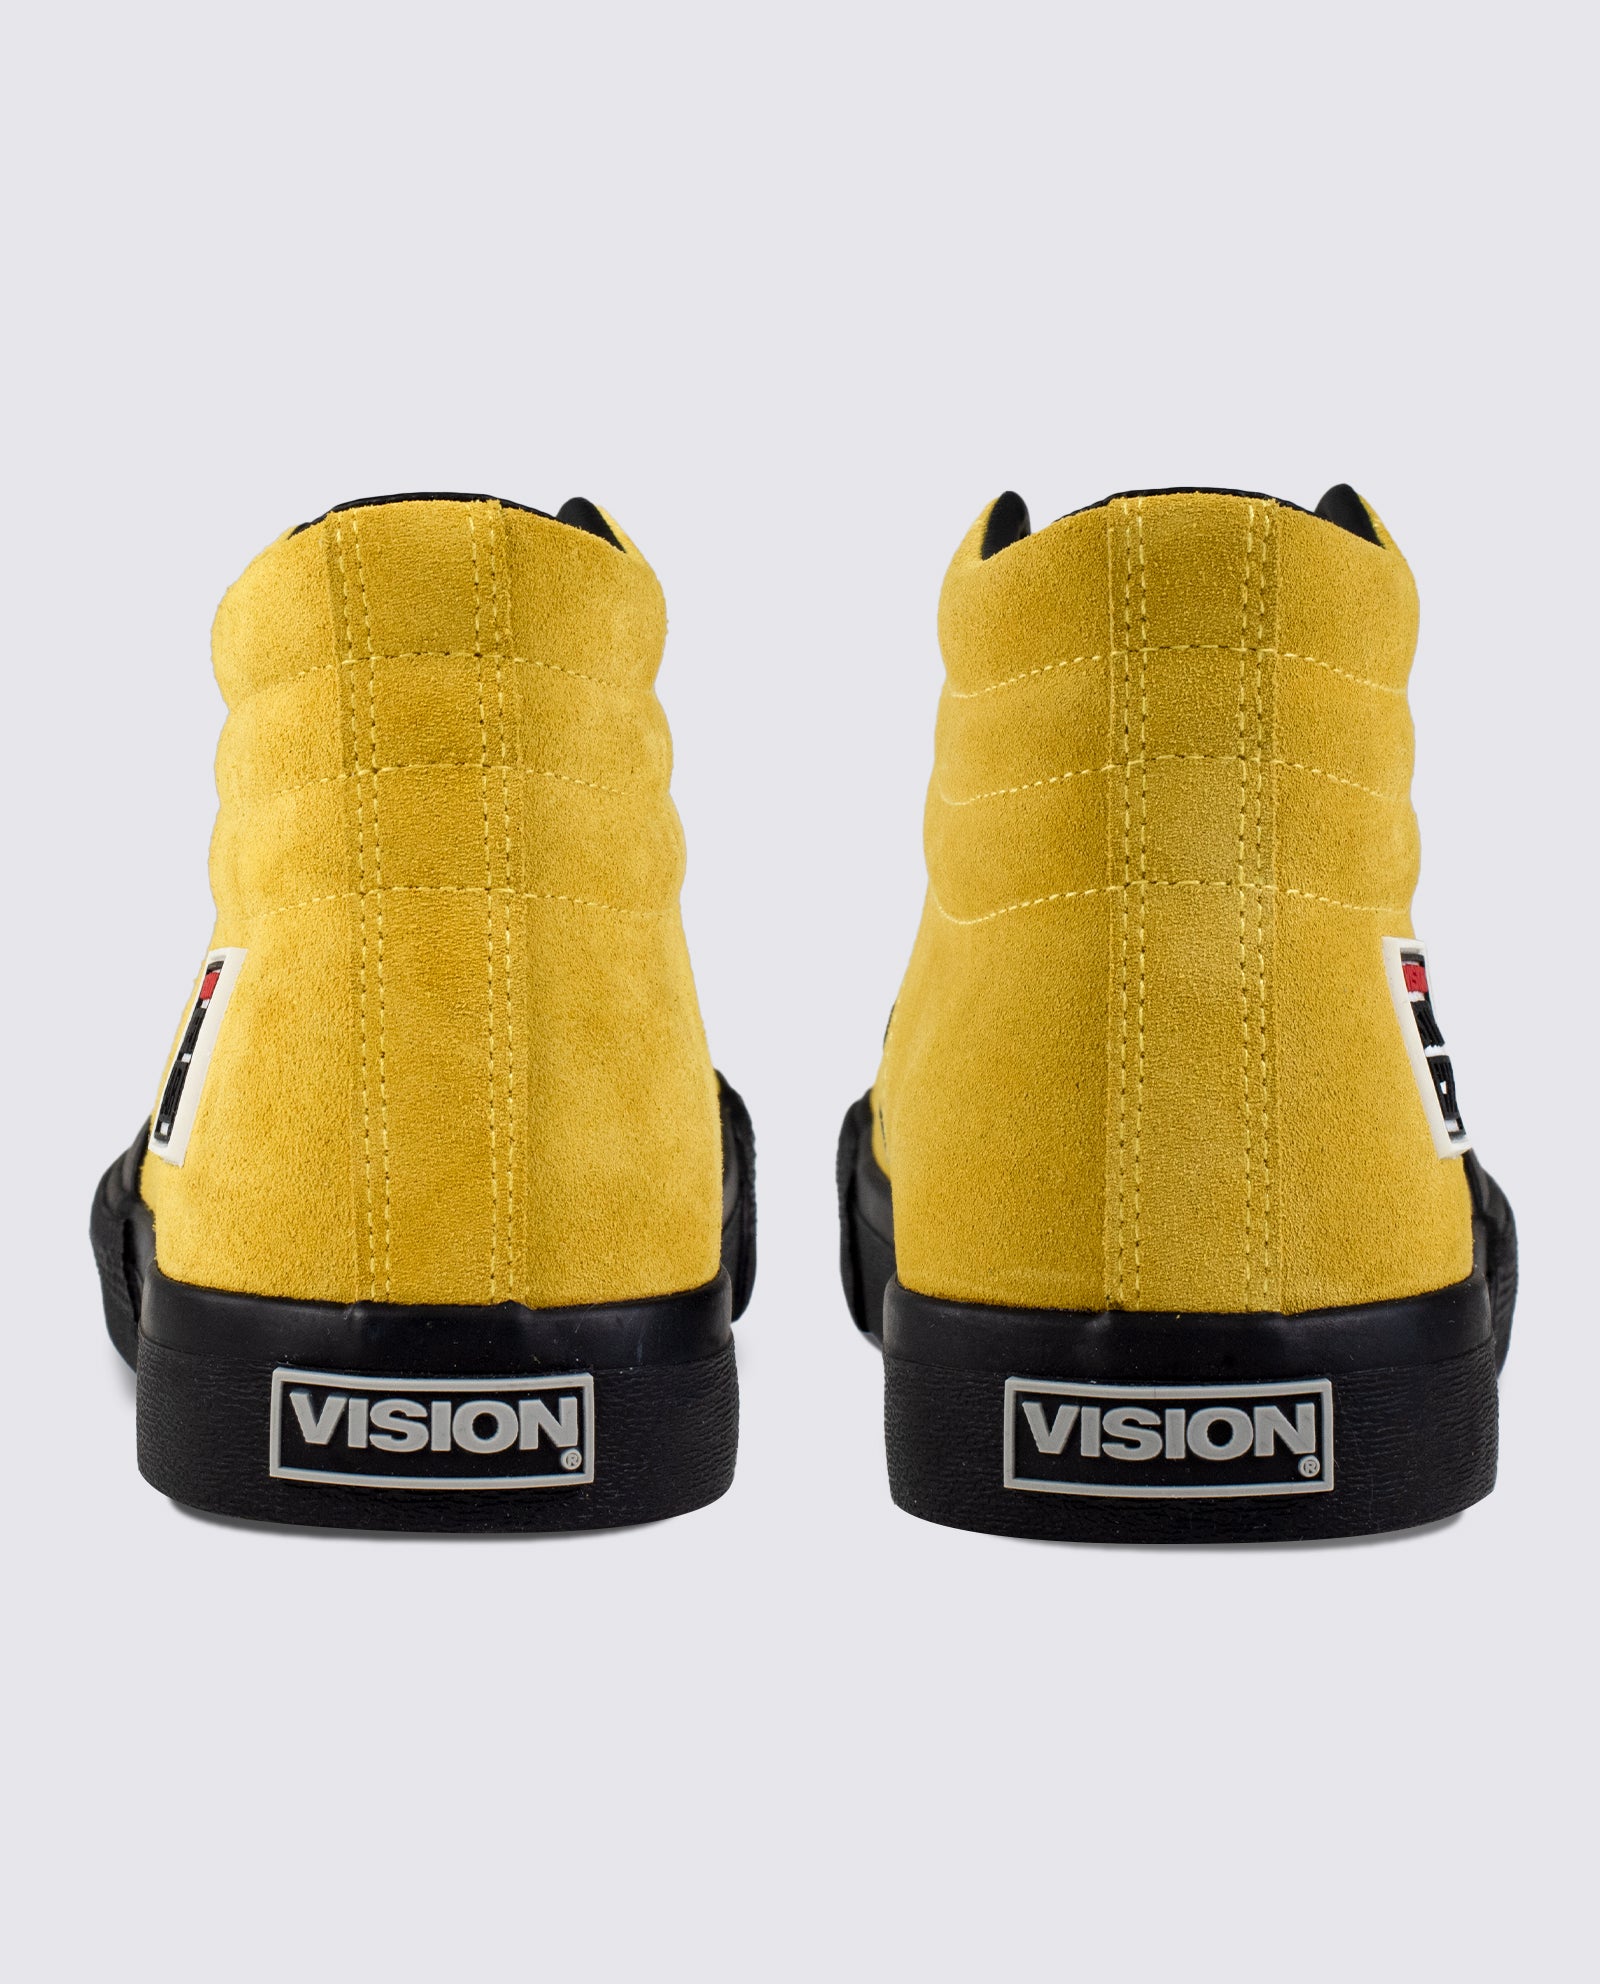 Vision Street Wear Leather Suede High Top Skateboard Sneakers Mustard